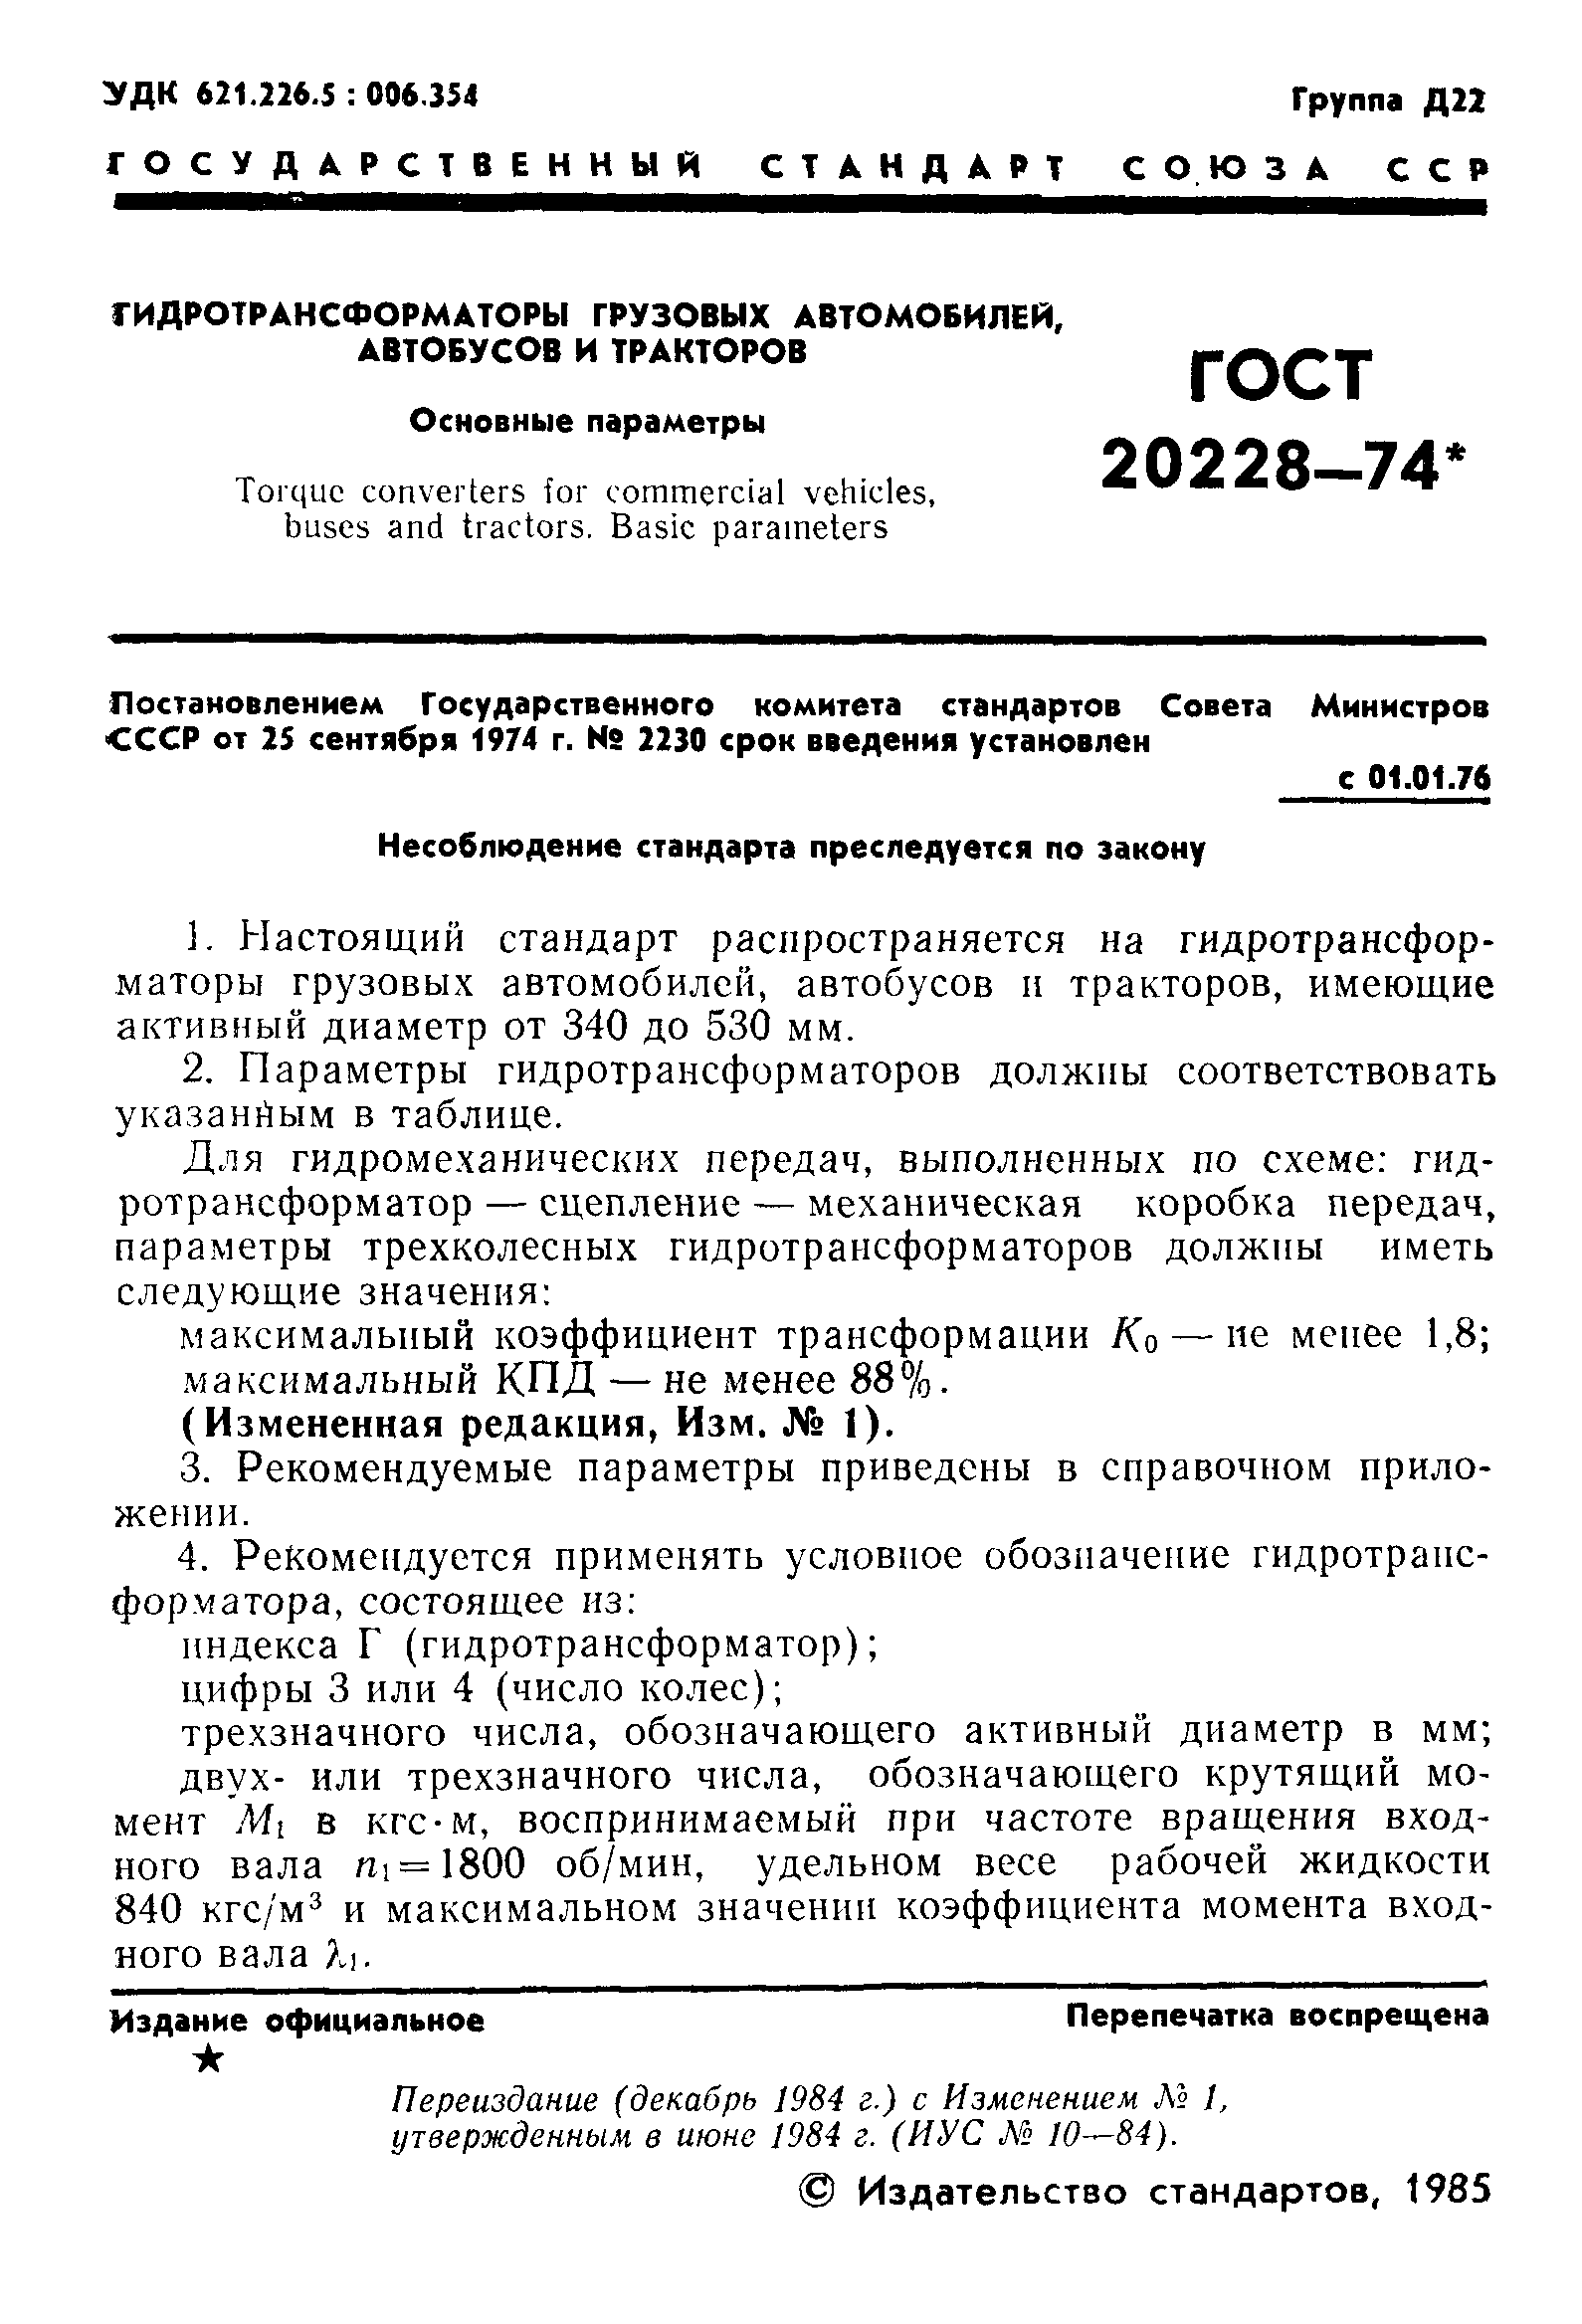 ГОСТ 20228-74